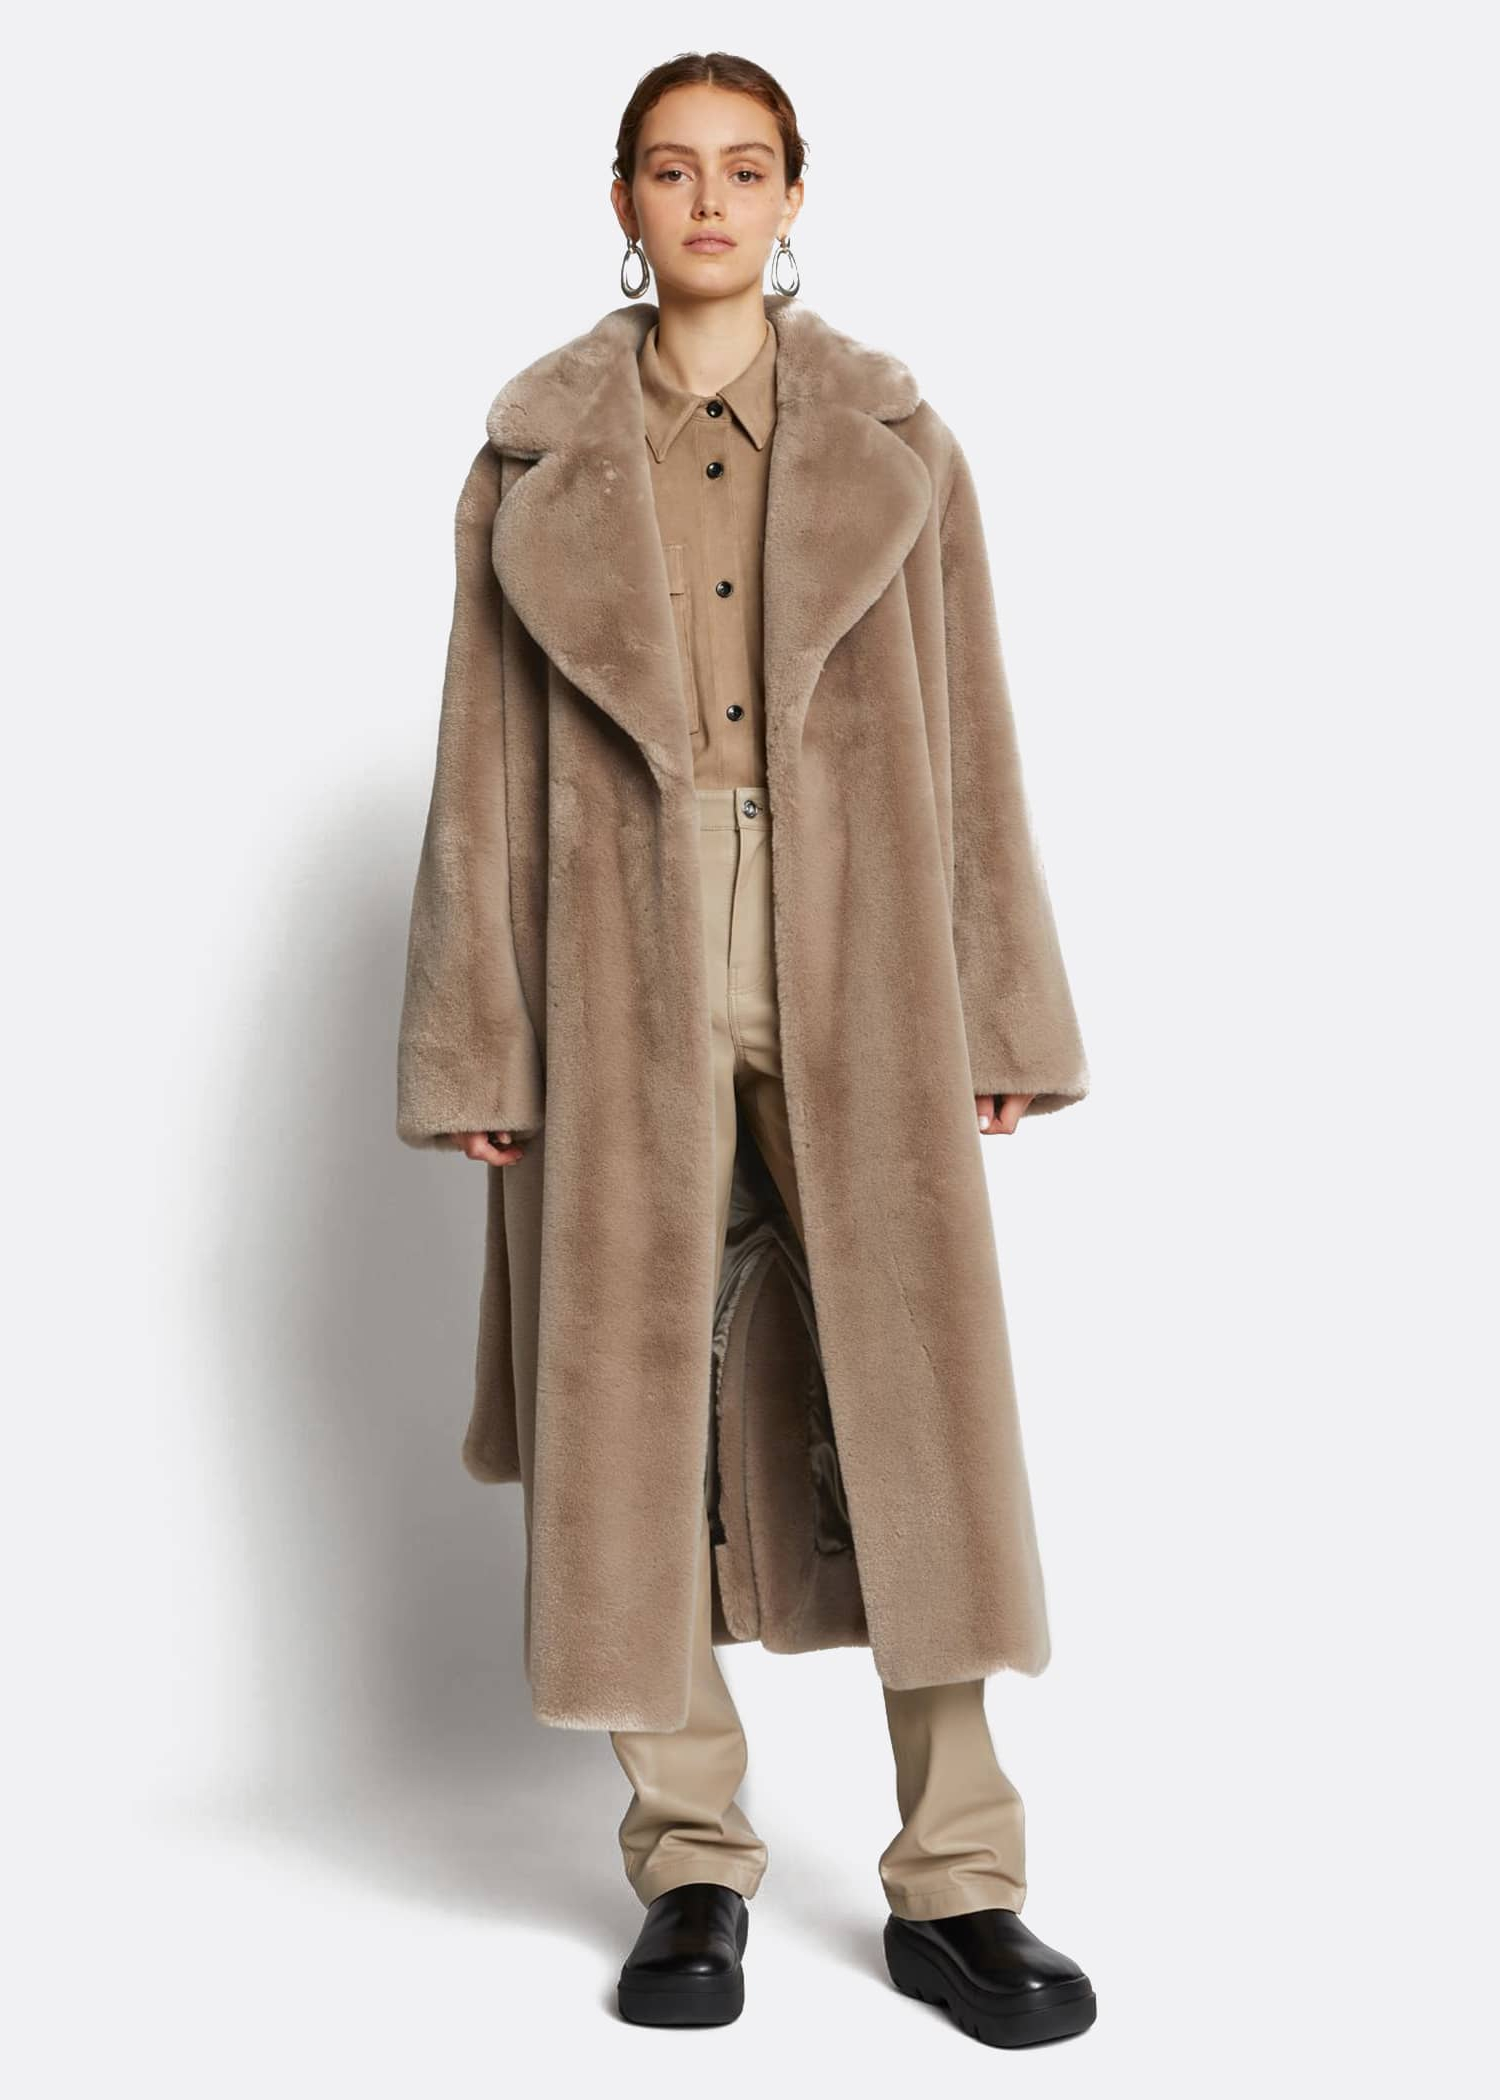 Proenza Schouler White Label Faux Fur Belted Coat